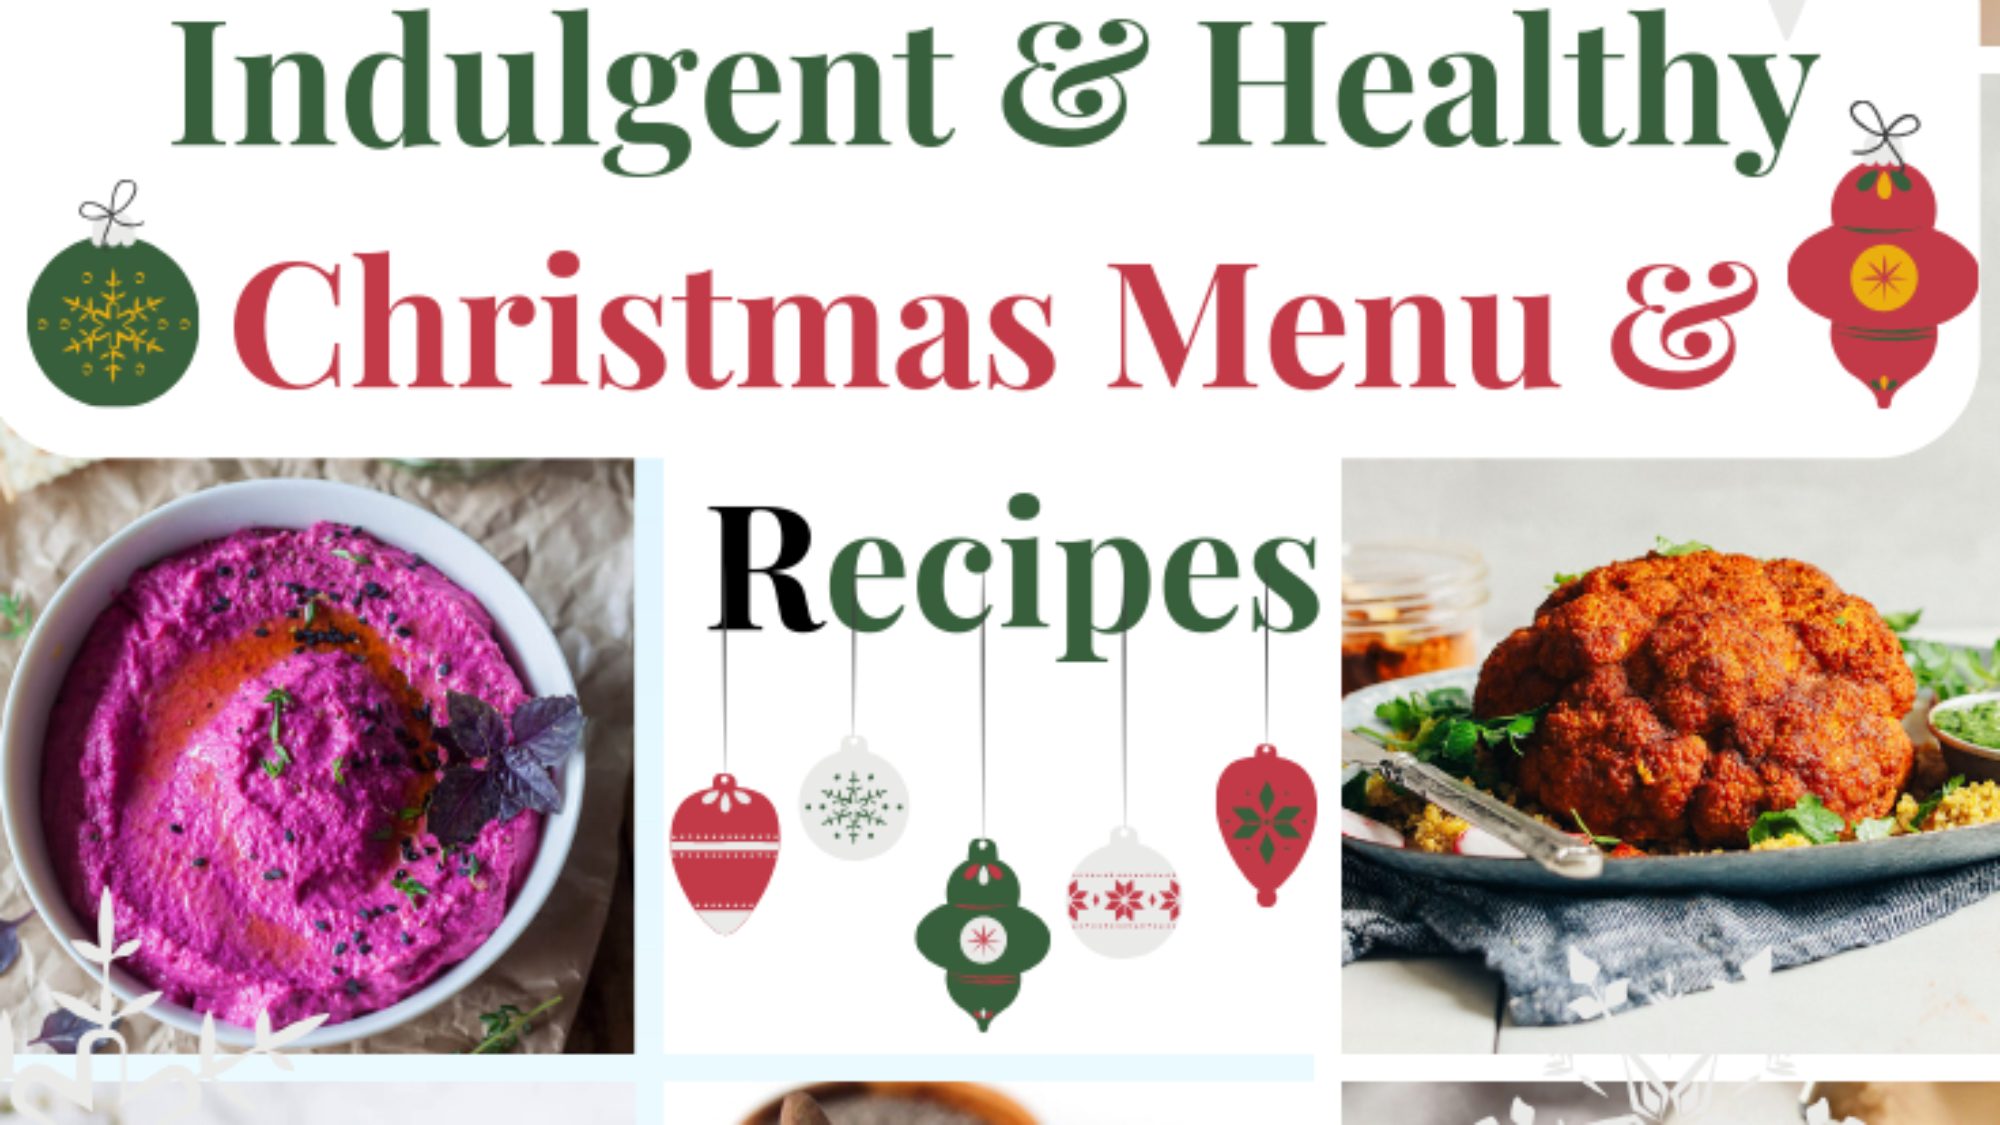 Indulgent & Healthy Christmas Menu & Recipes